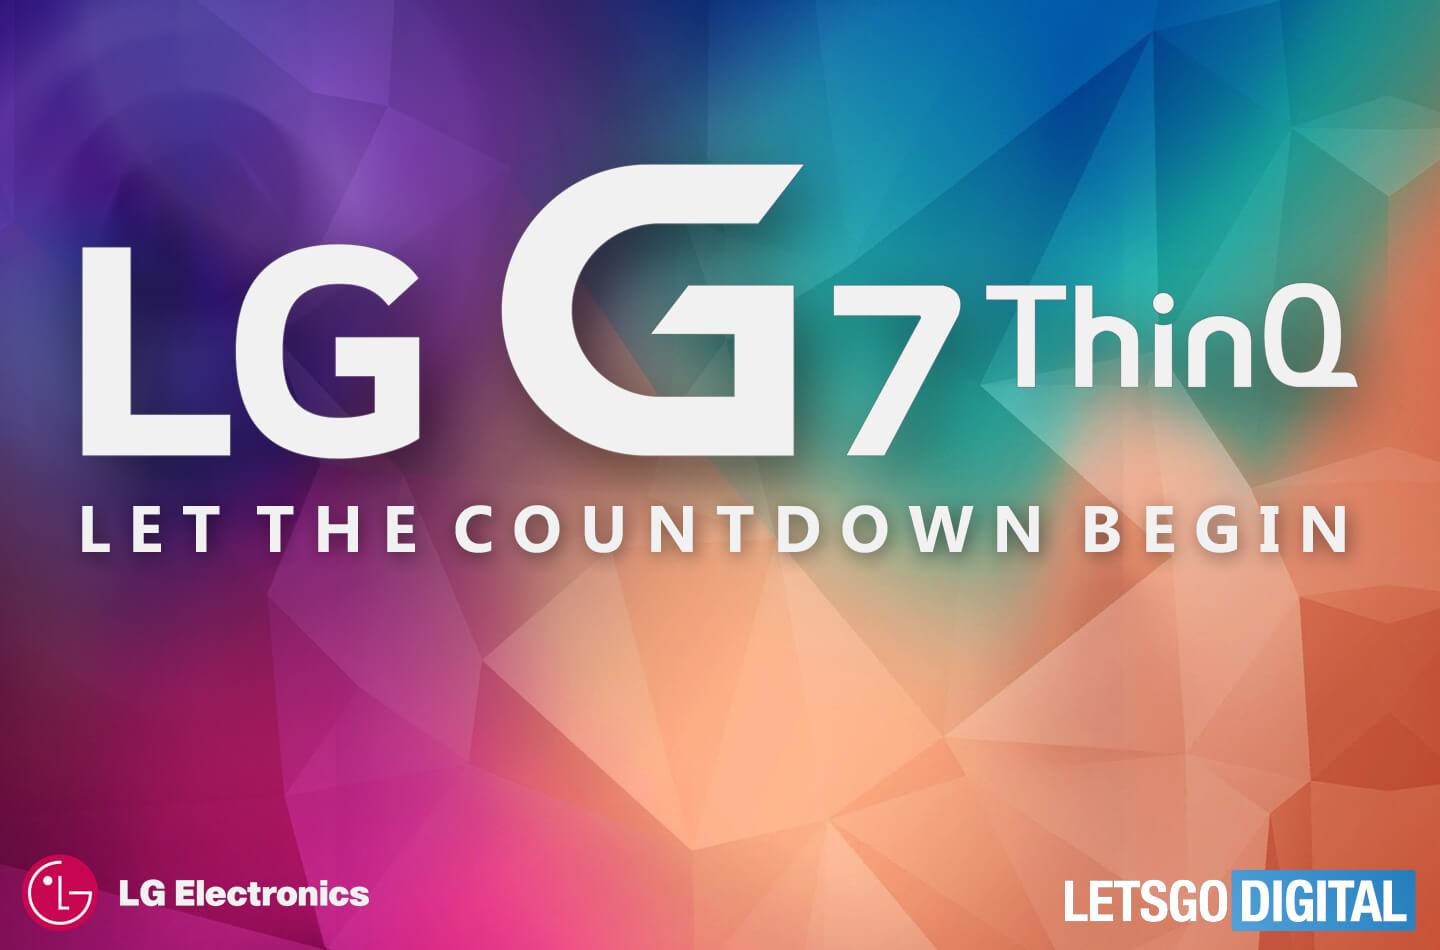 Puntaje de prueba de referencia de LG G7 ThinQ